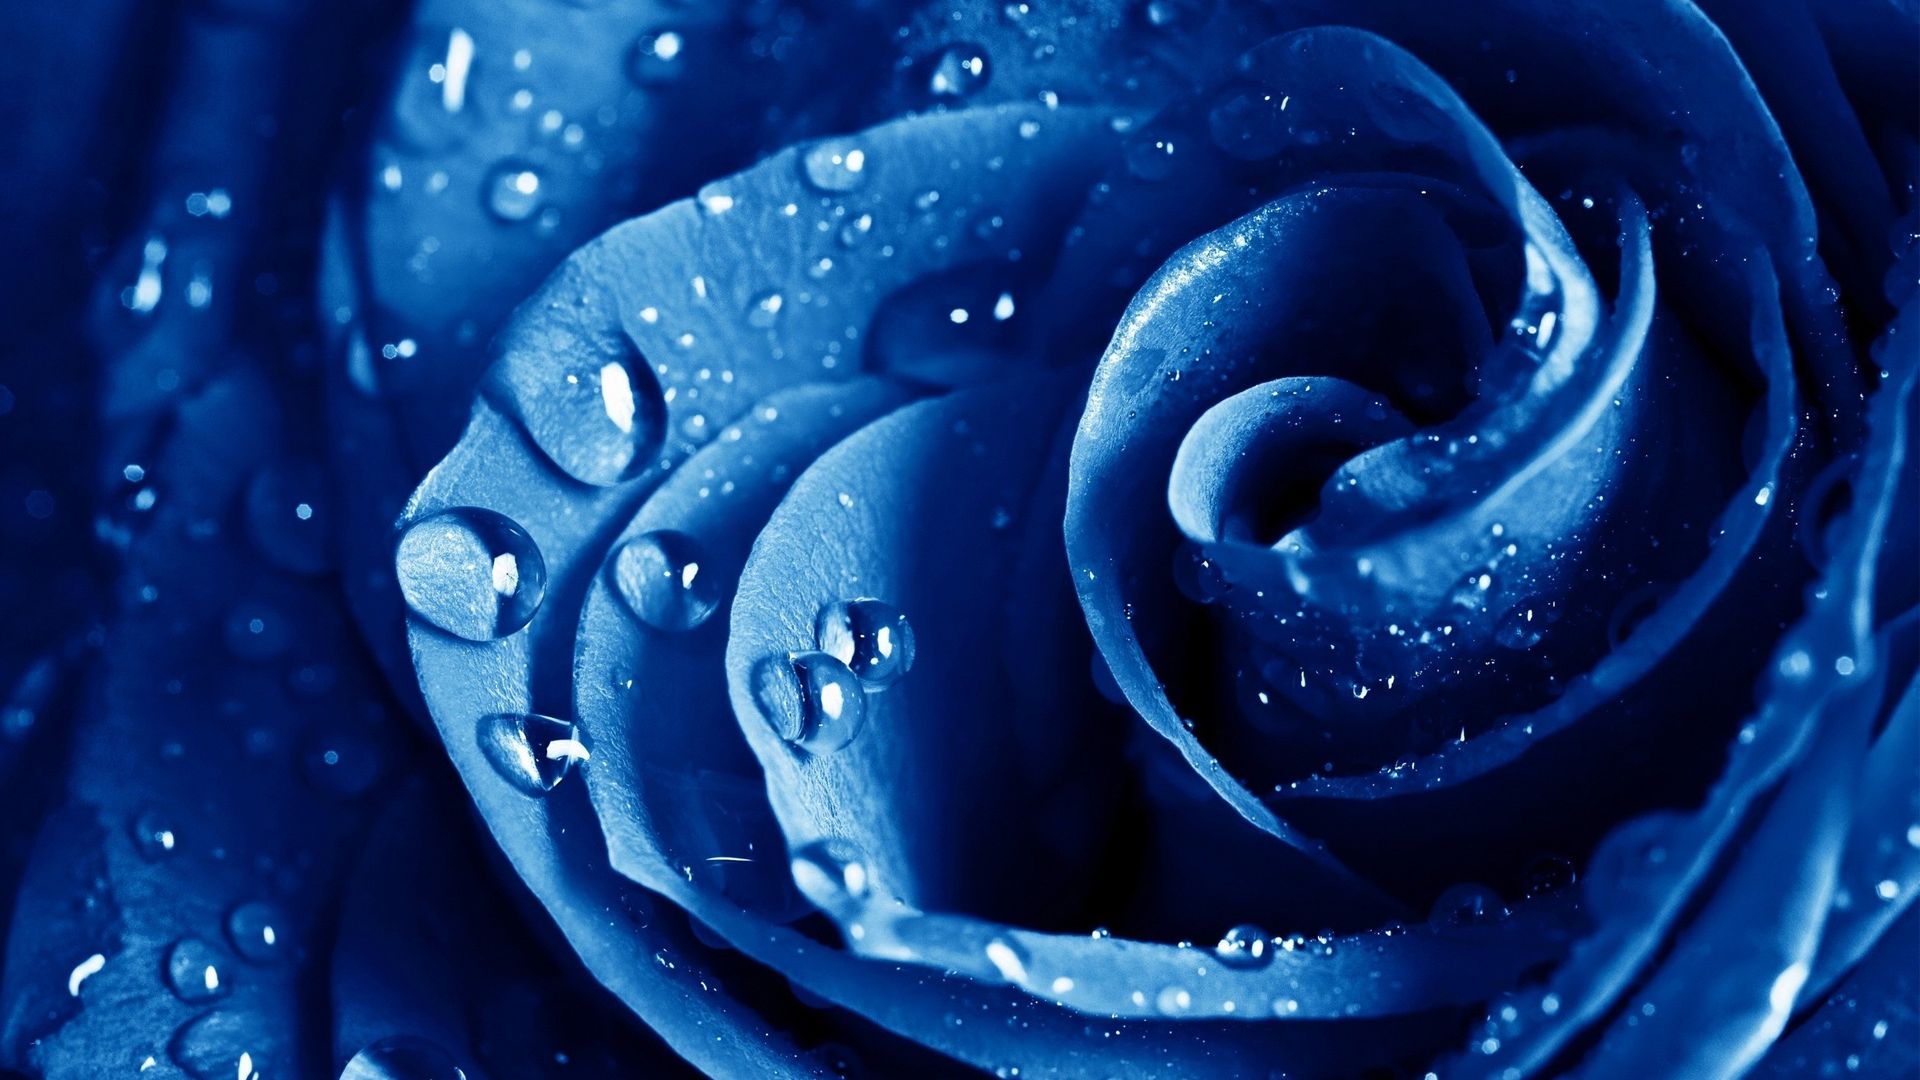 Desktop Wallpaper Blue Rose Flower, Water Drops, Close Up, Hd Image,  Picture, Background, Zujd8y